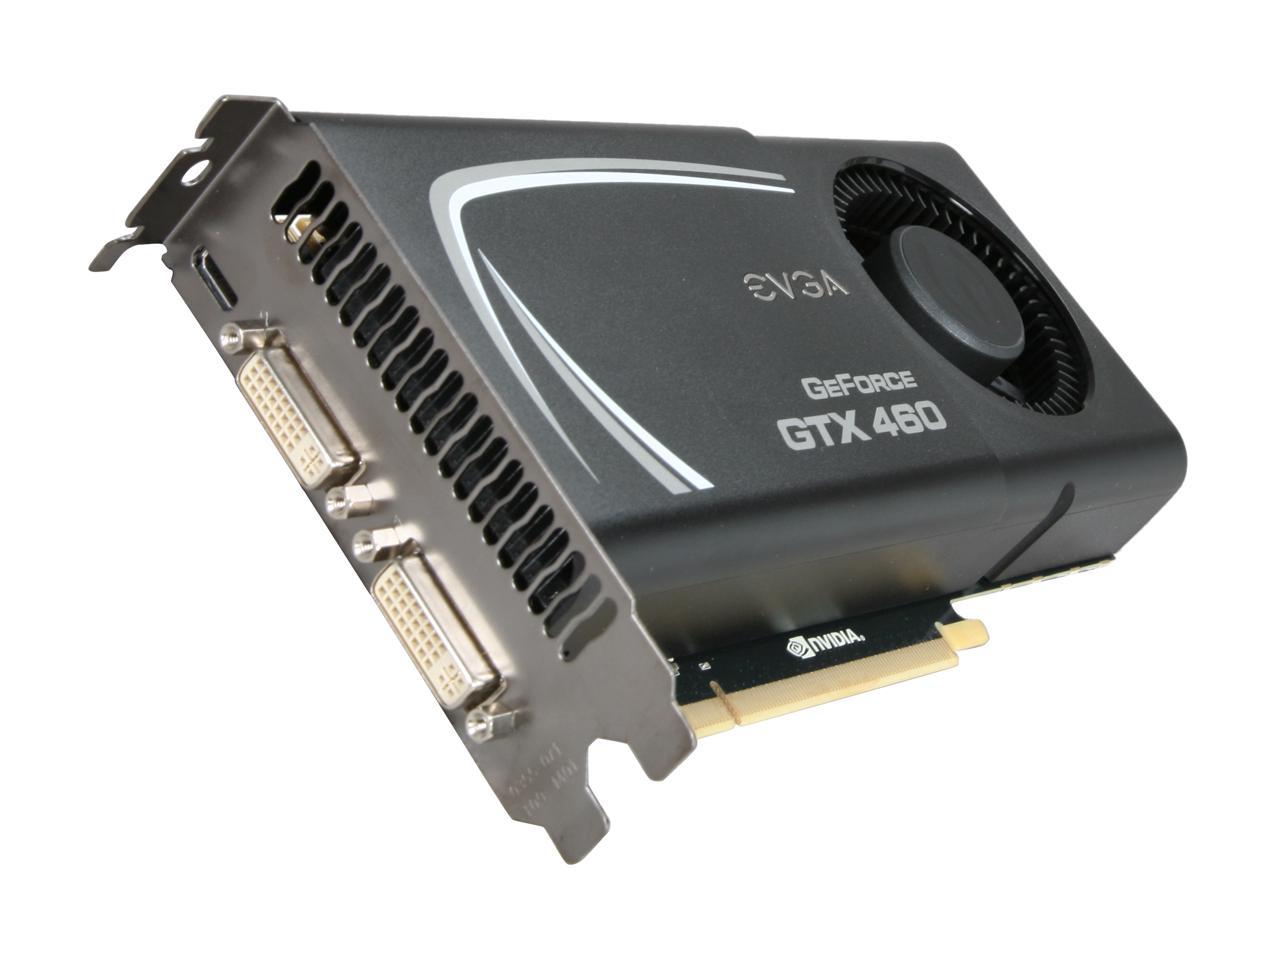 Gtx 460 1gb. NVIDIA GEFORCE GTX 460 1 ГБ. GTX 460 2gb. NVIDIA gt 460.